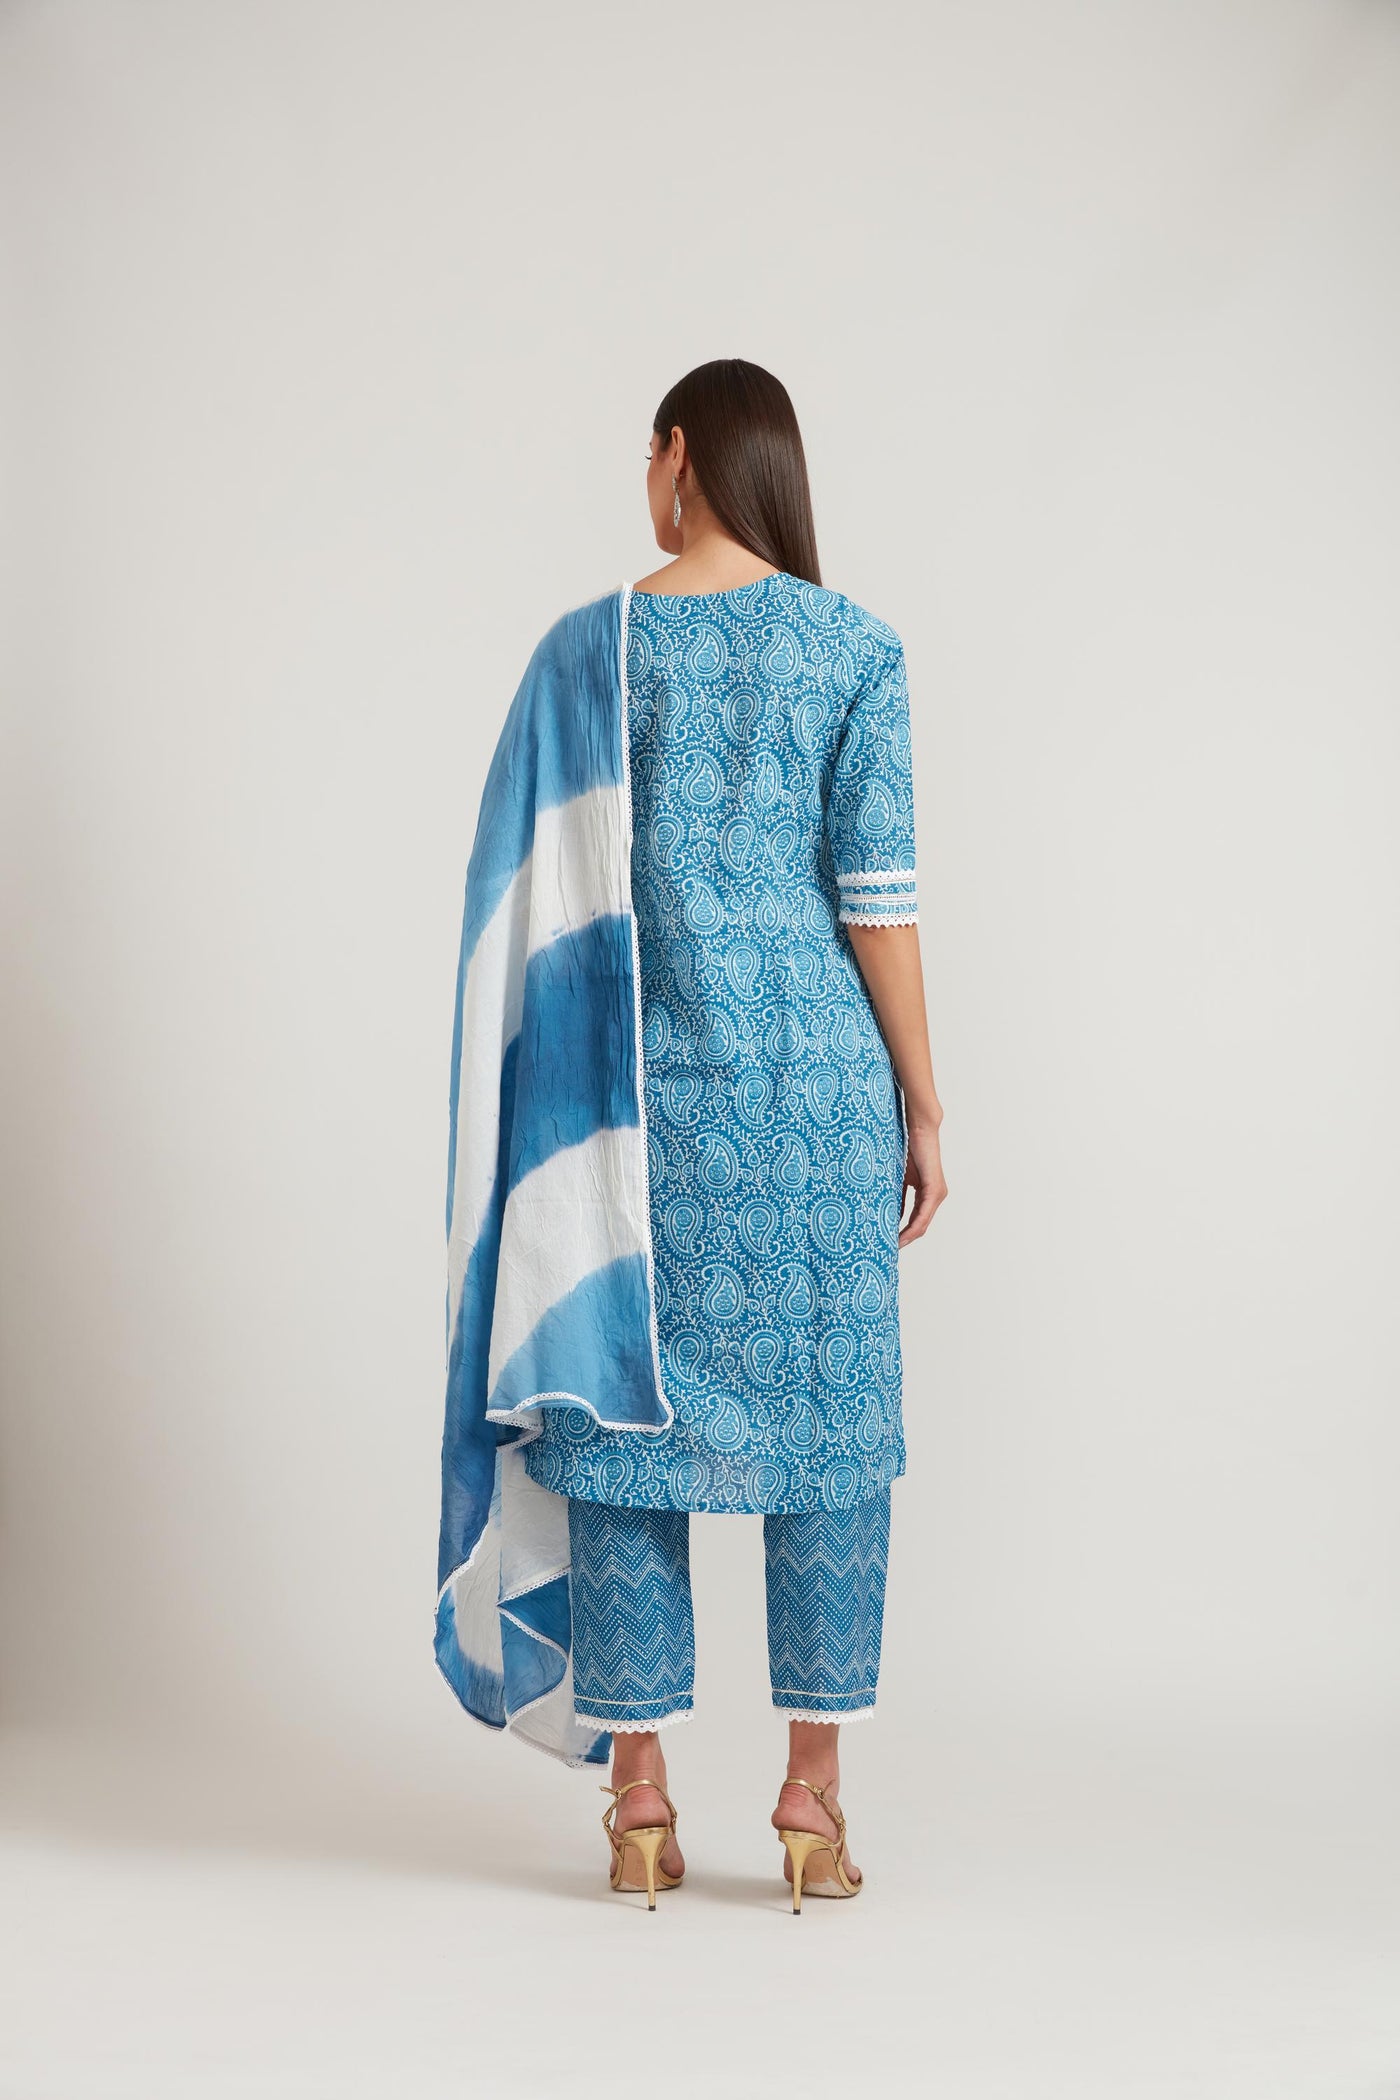 Neeru's Blue Color Cotton Fabric Suit Set